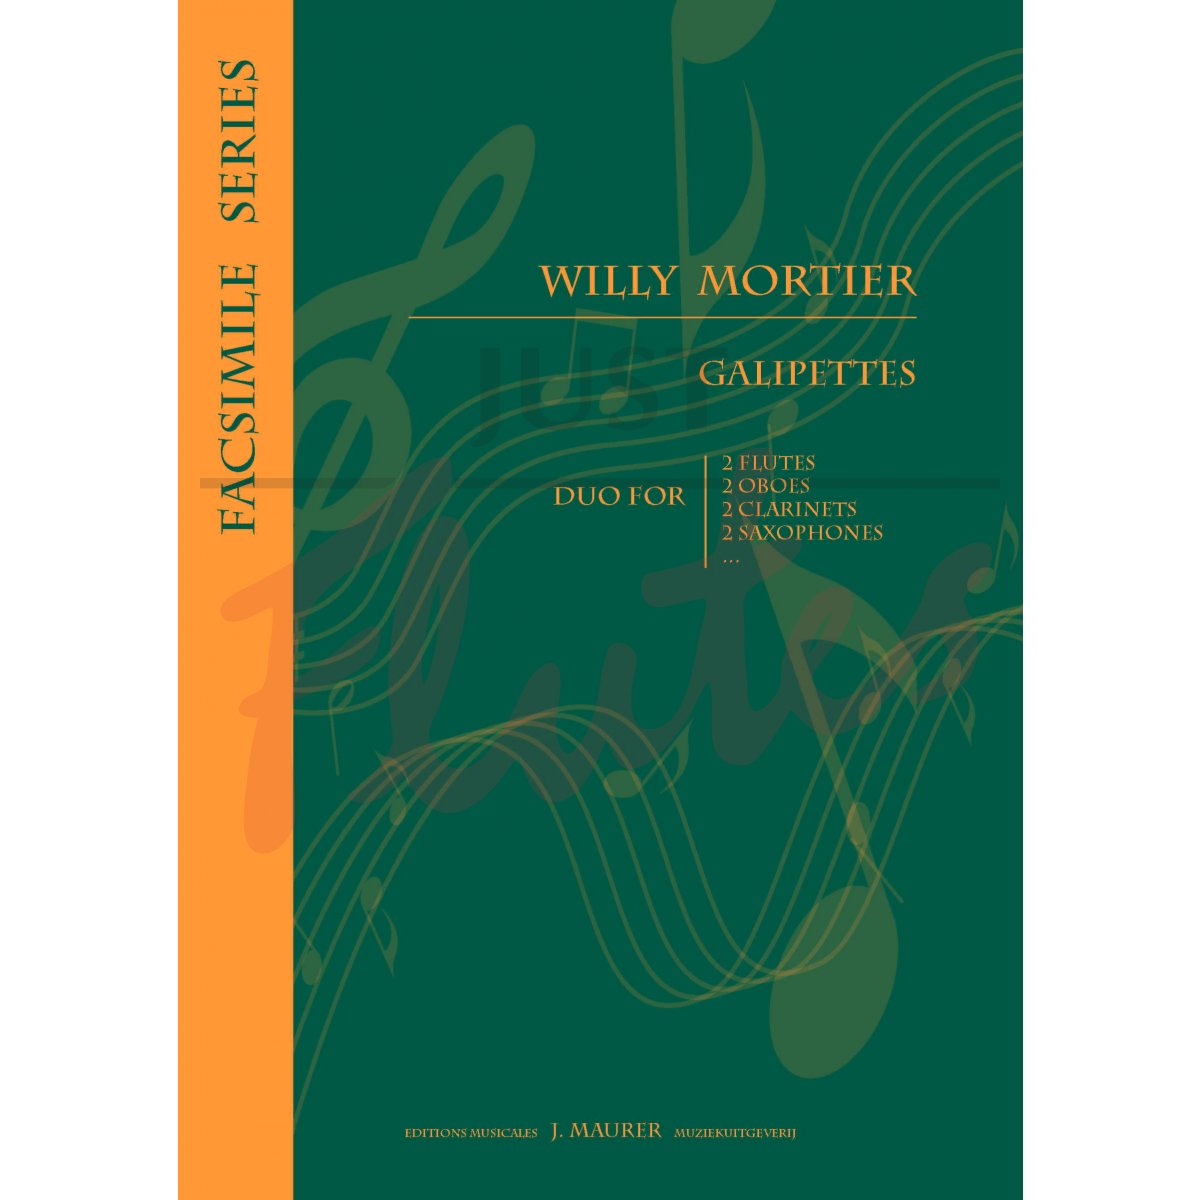 Galipettes for Flute Duet